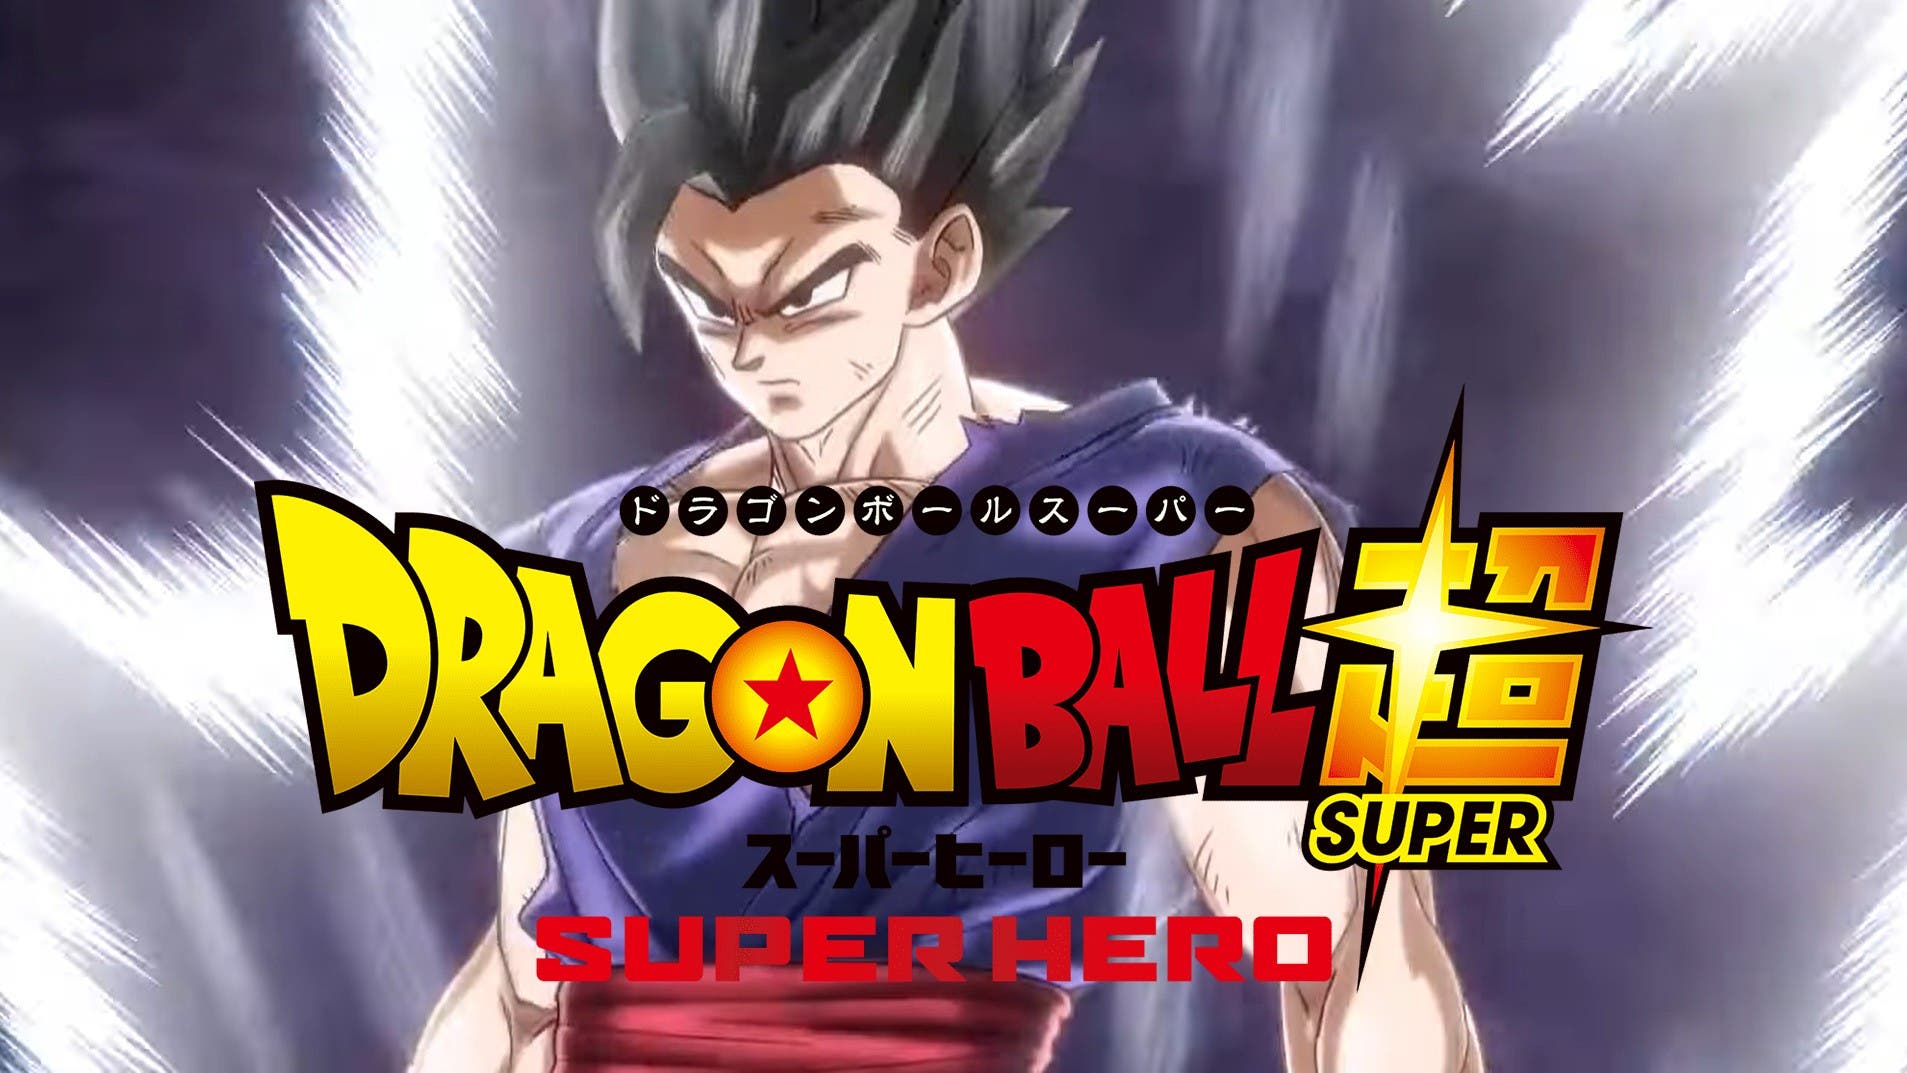 Dragon Ball Super Super Hero (Nuevo Adelanto): GOHAN Despierta su